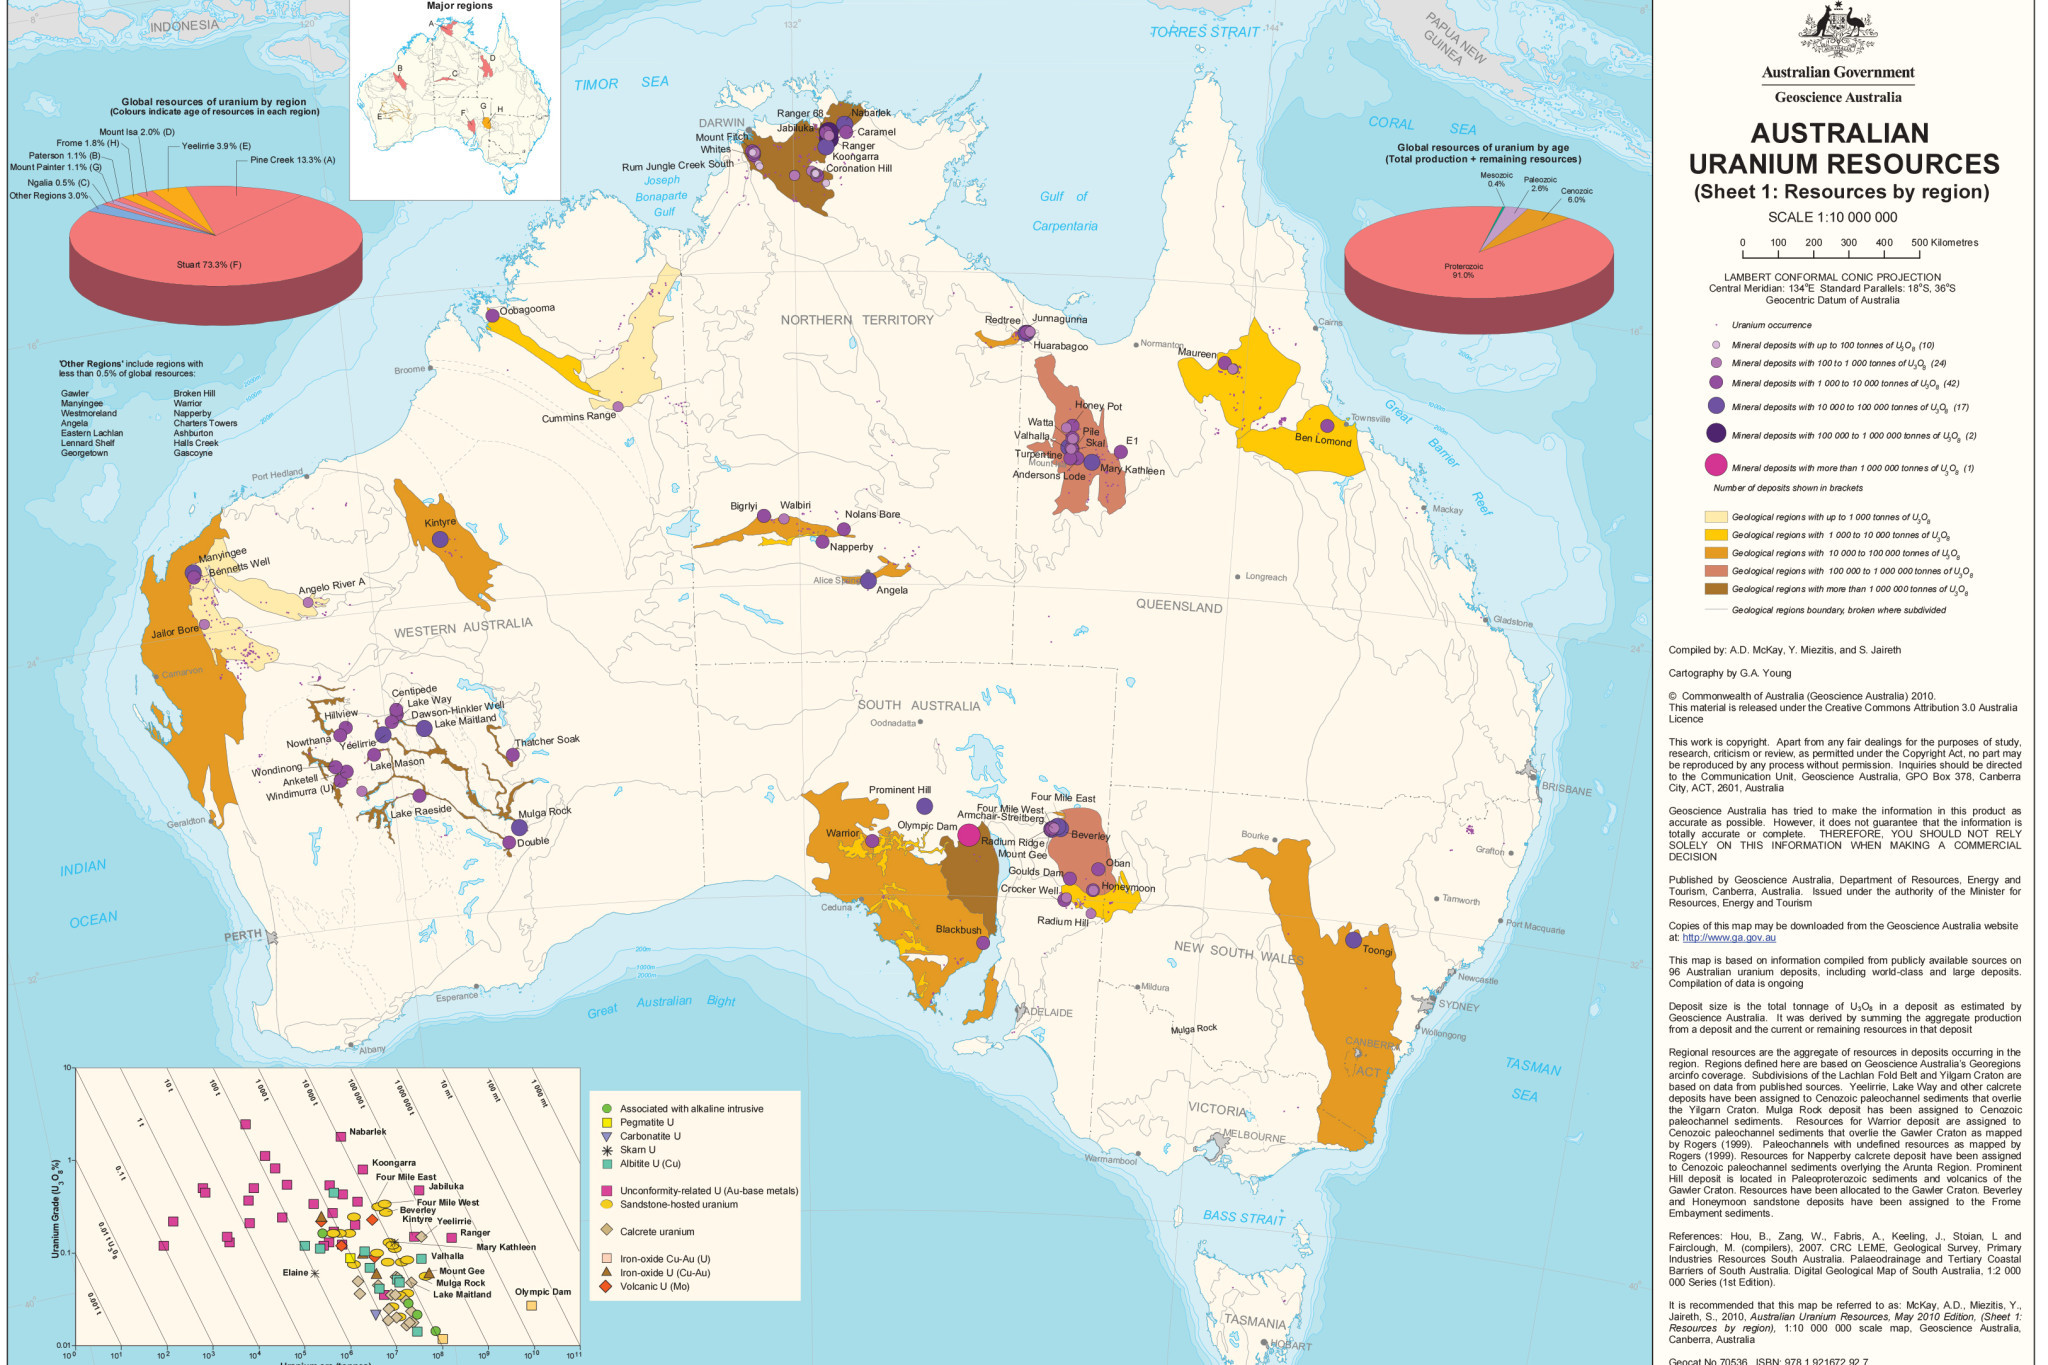 North West Queensland still has large deposits of uranium.